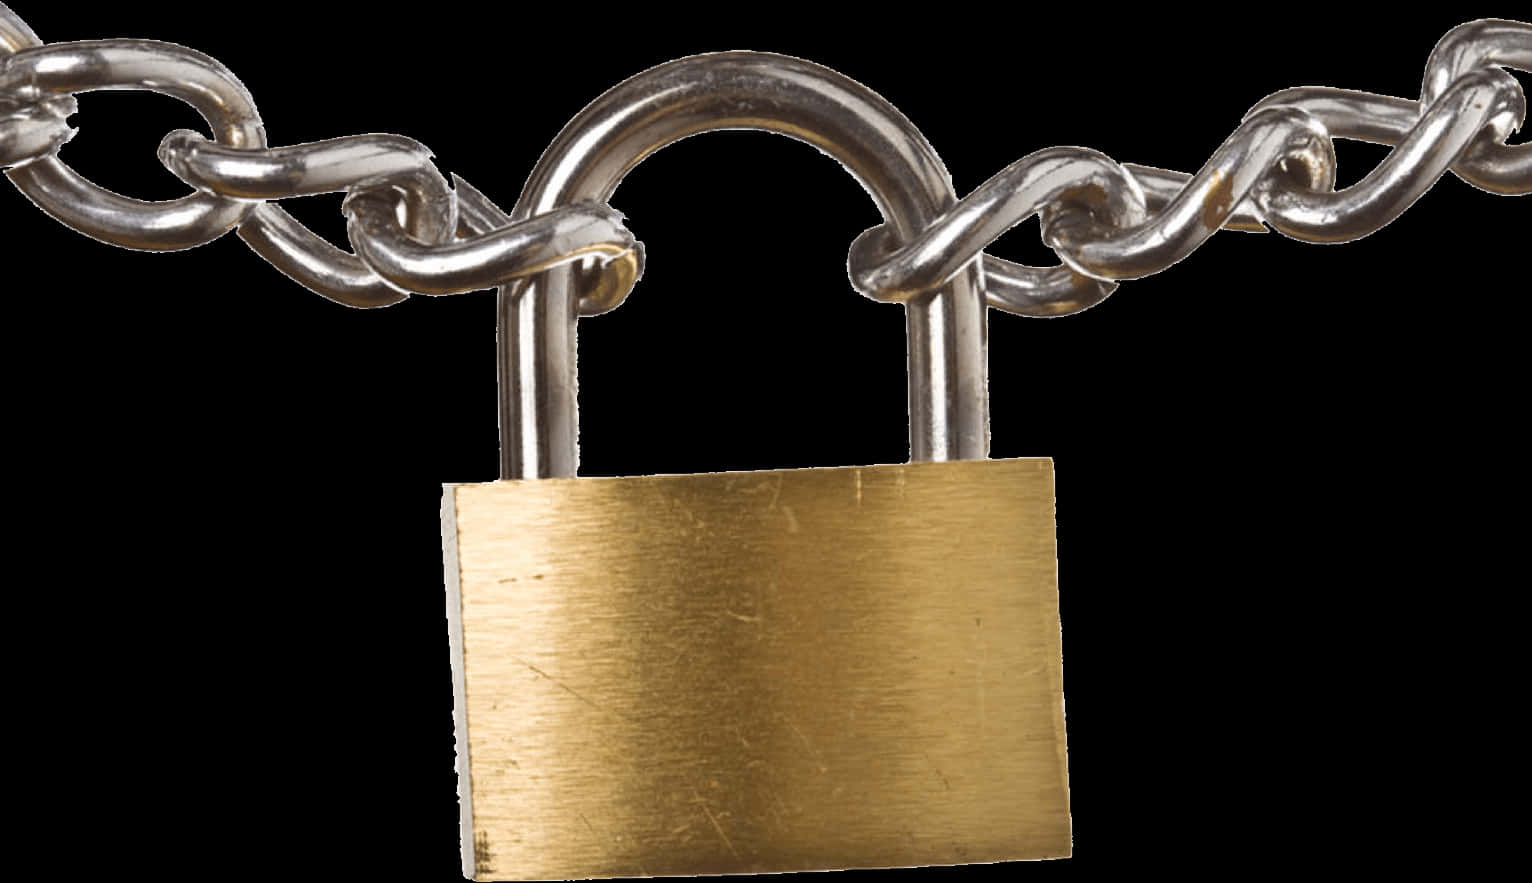 Padlock Securing Chain Link